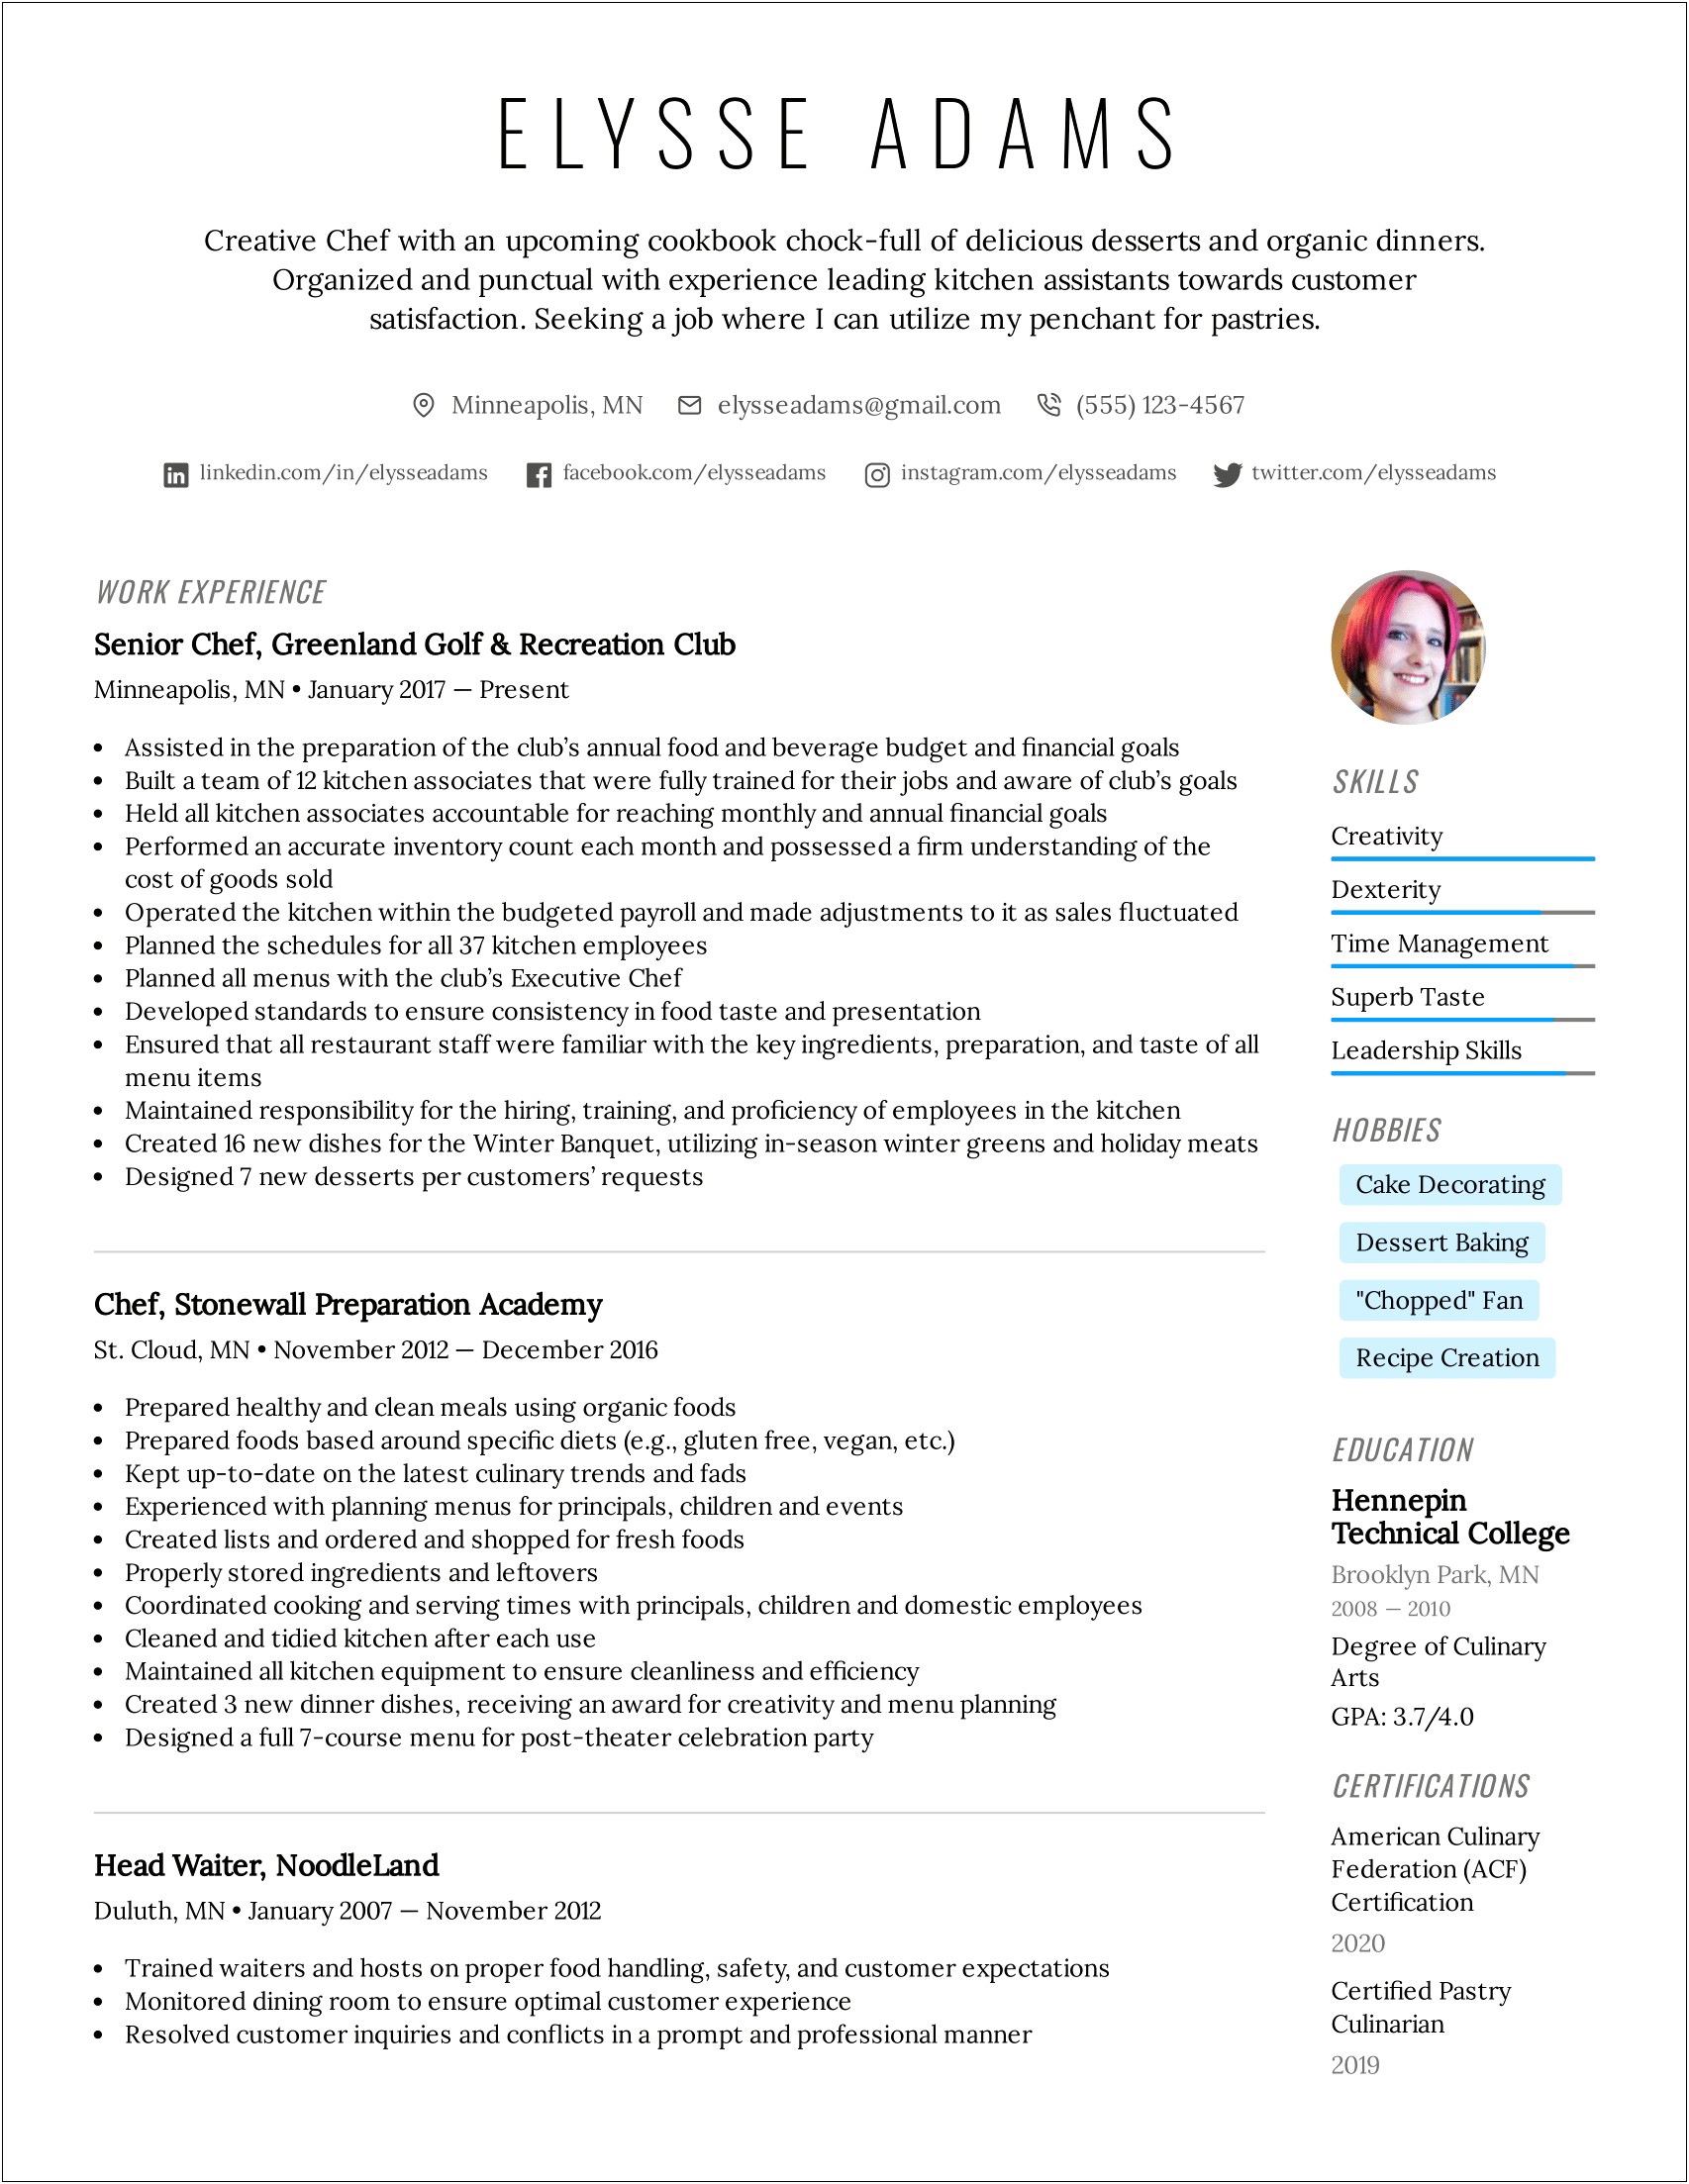 Sample Resume For Online Typing Job